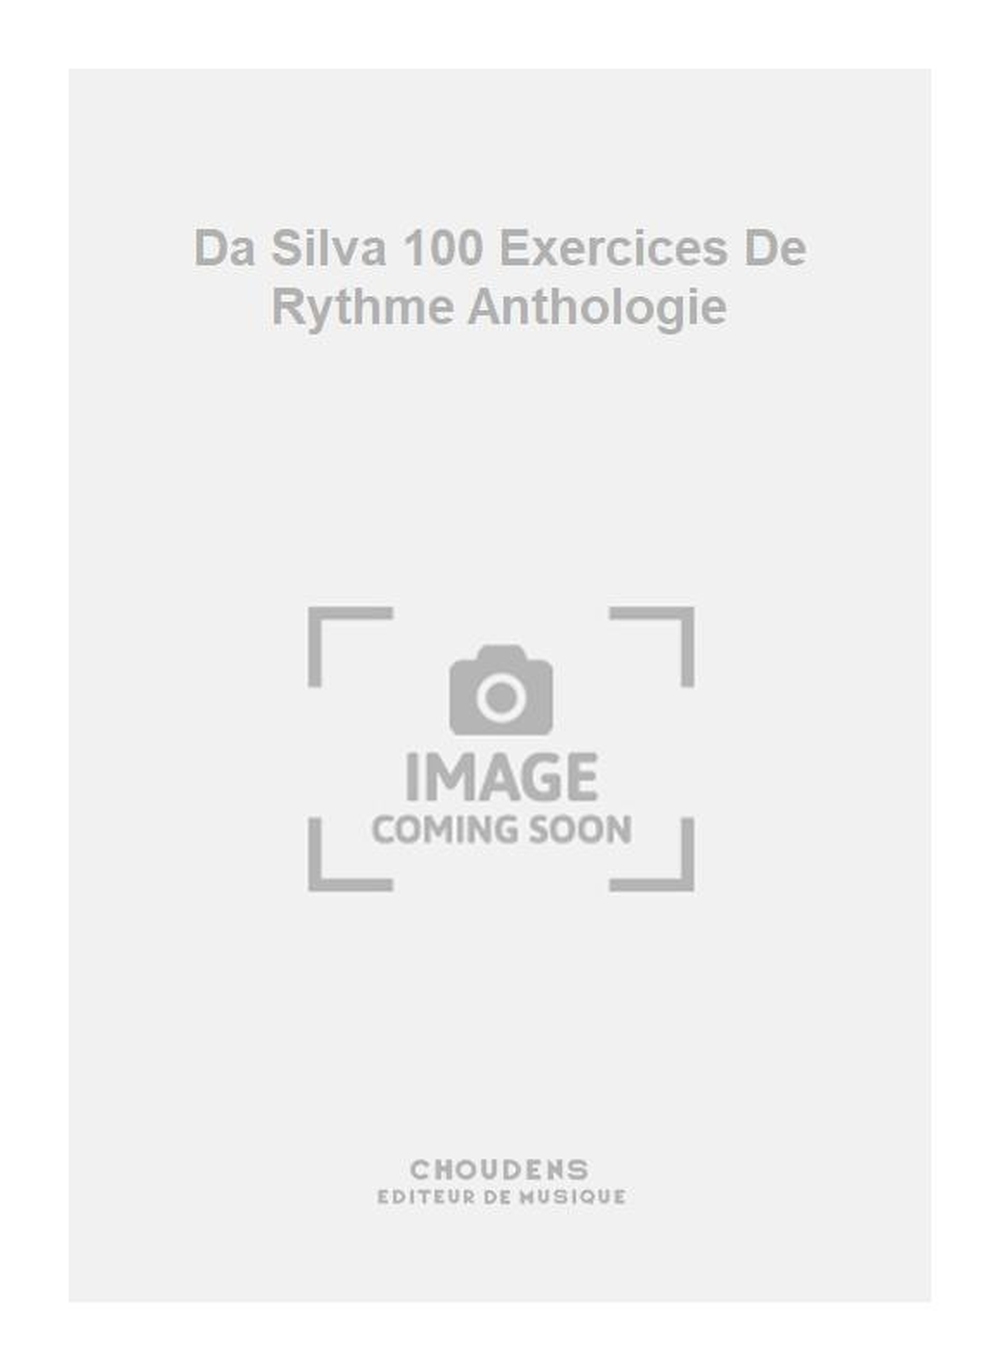 Potin: Da Silva 100 Exercices De Rythme Anthologie